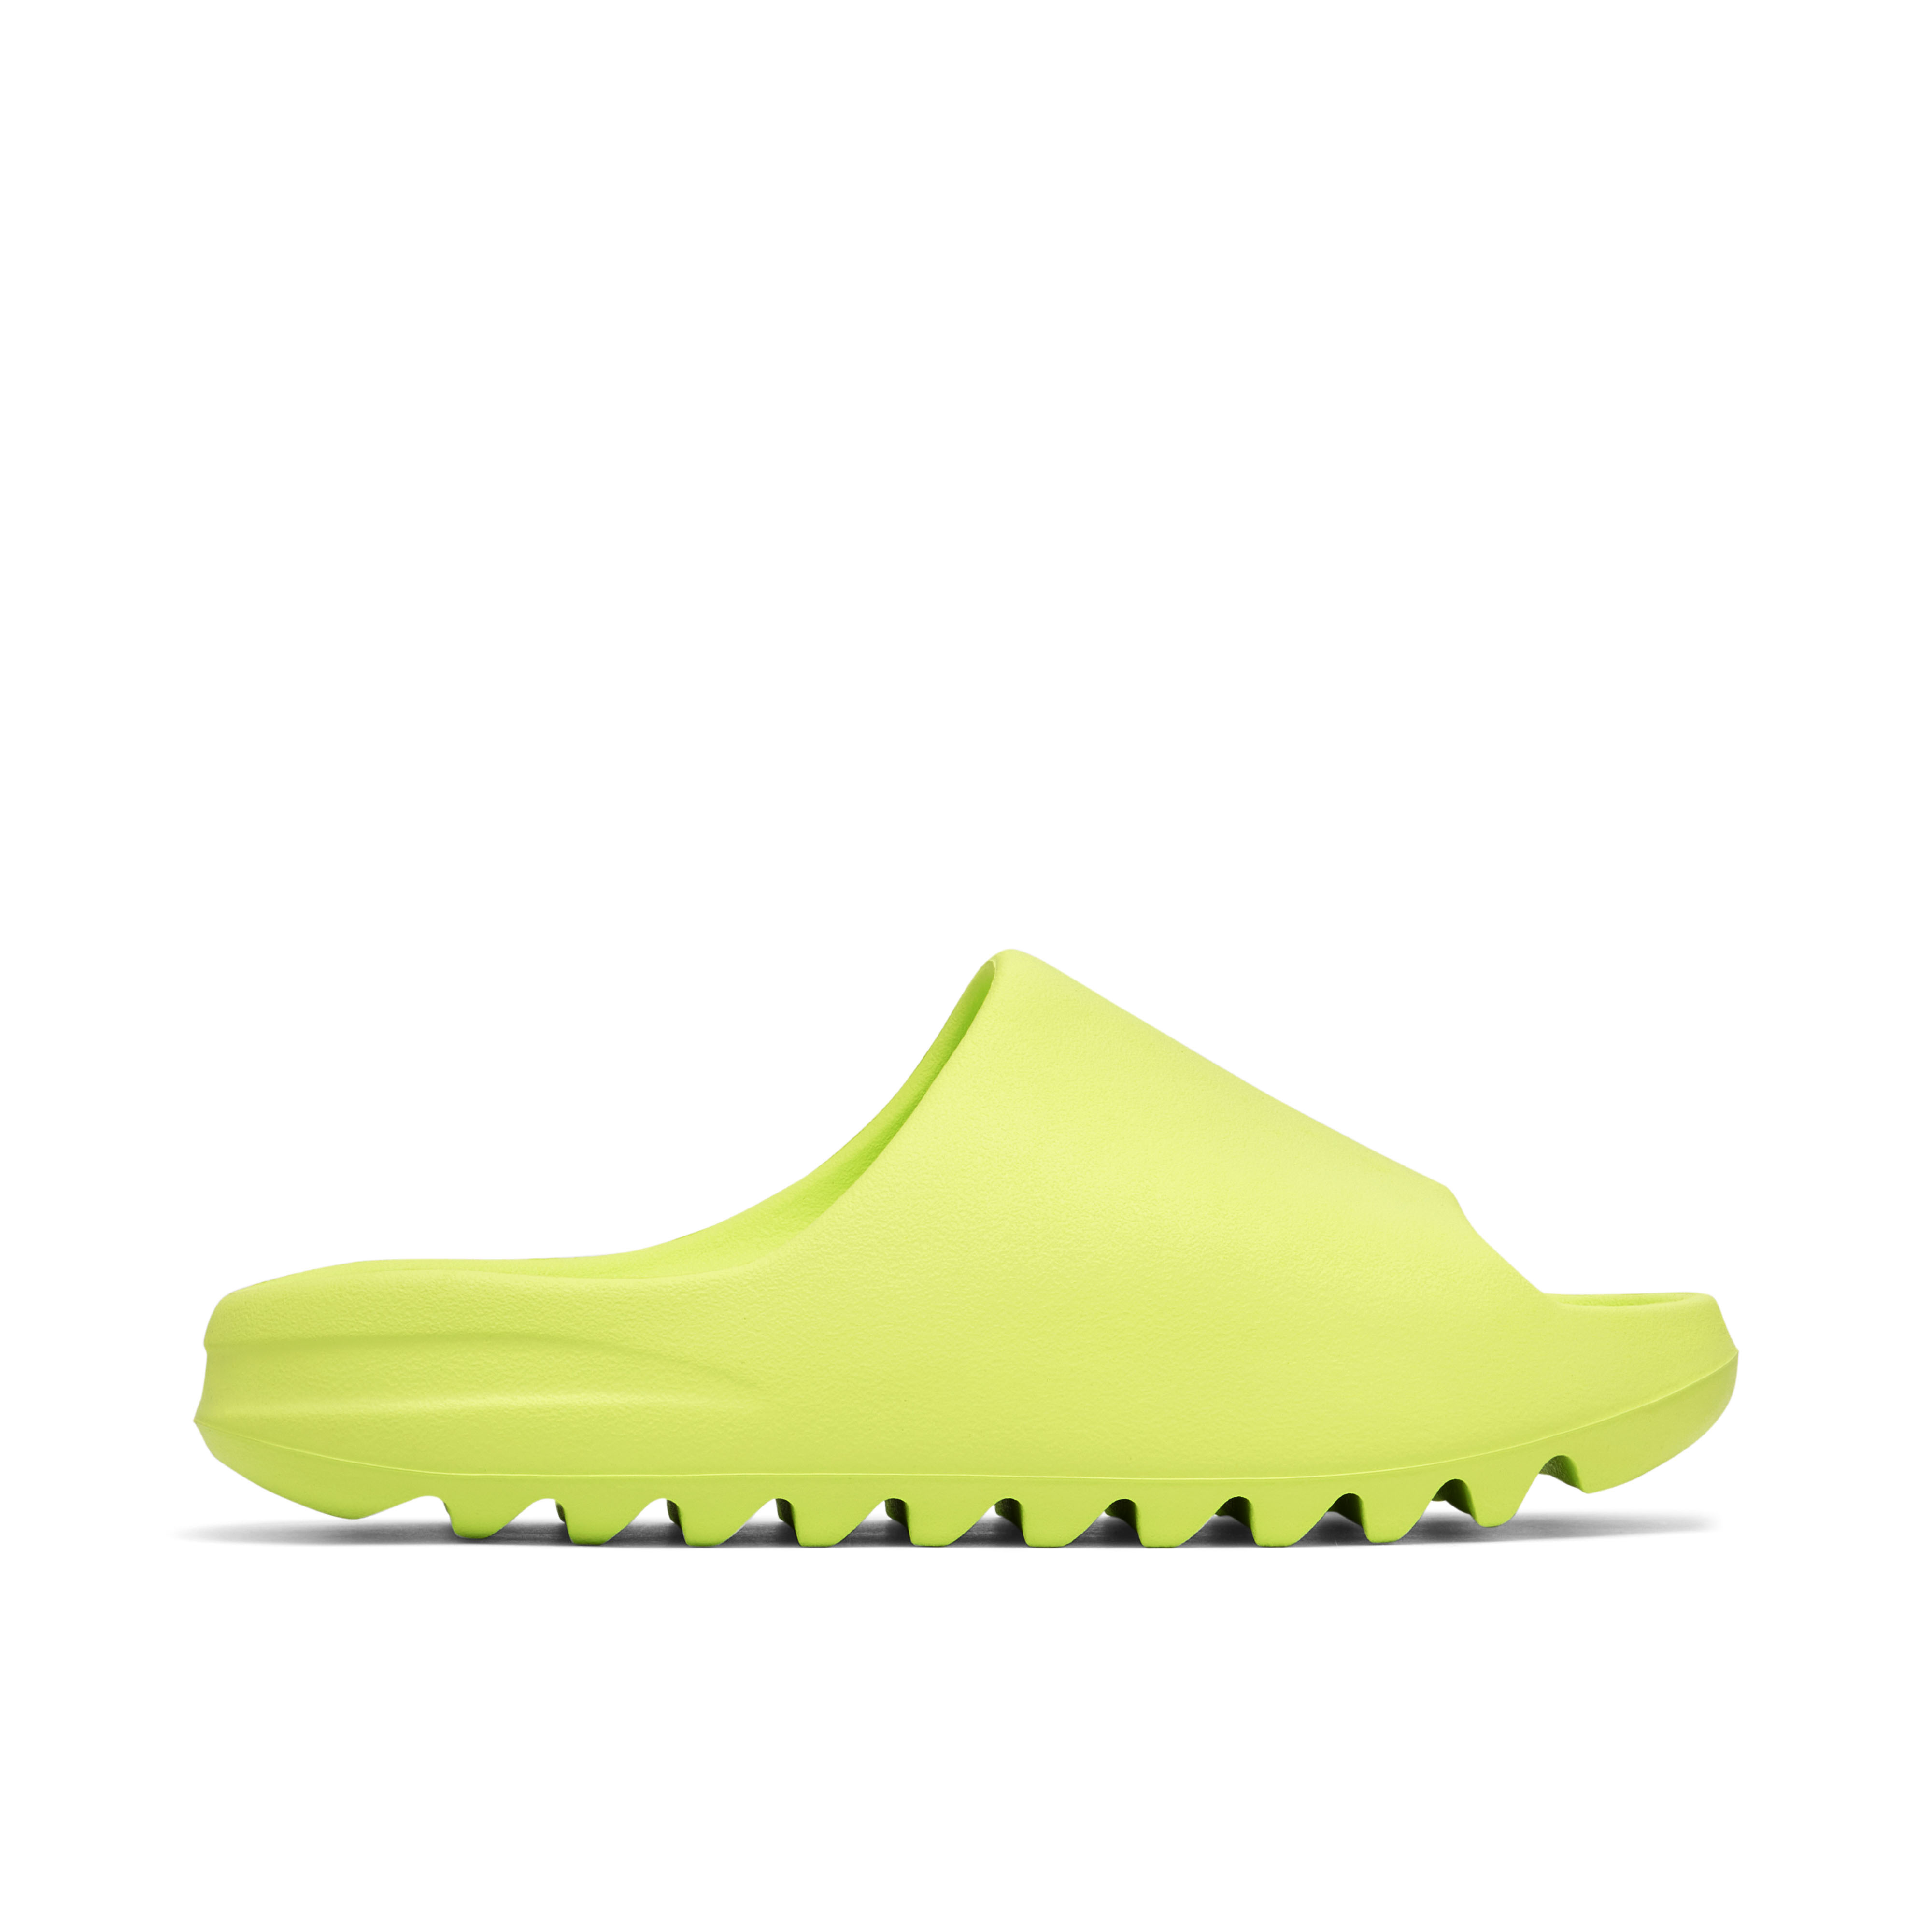 【28.5cm】adidas YEEZY Slide "Glow Green"